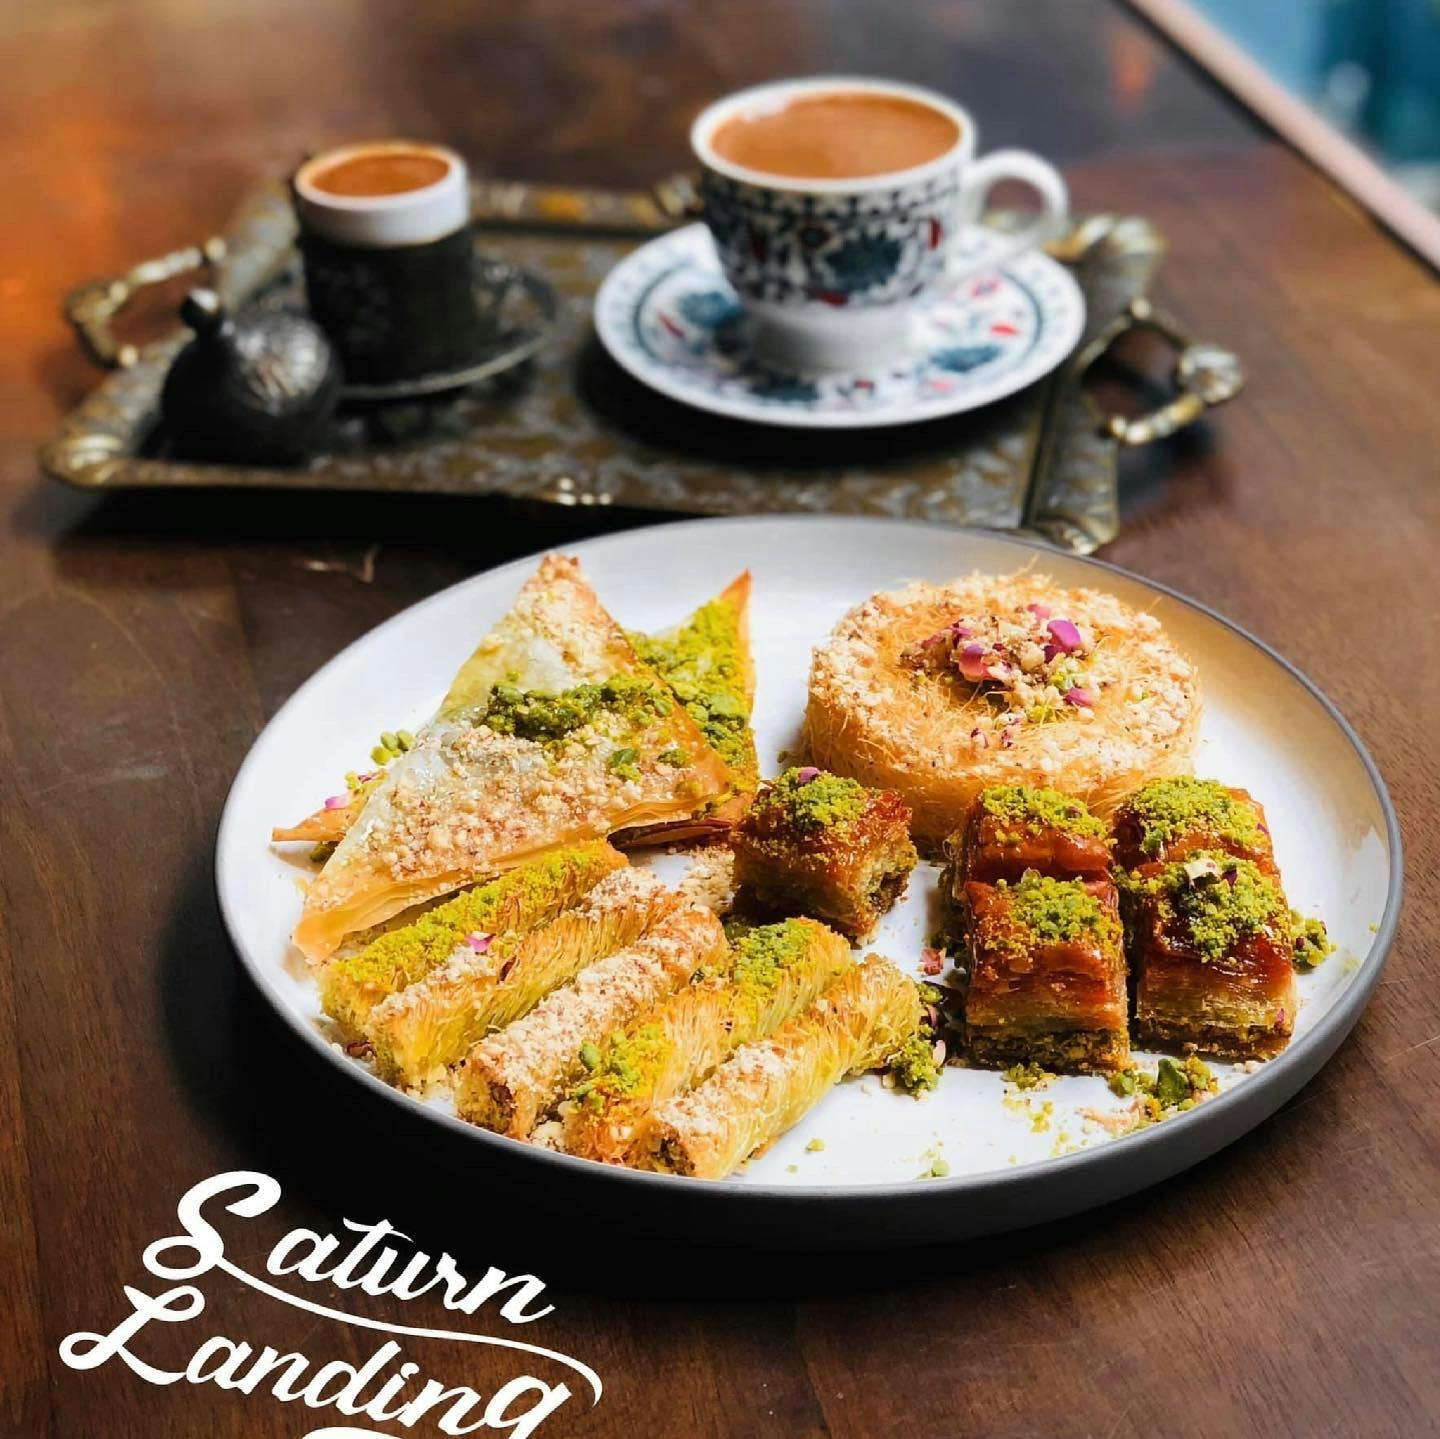 Saturn Landing Turkish Coffee 登陸土星土耳其咖啡永康店